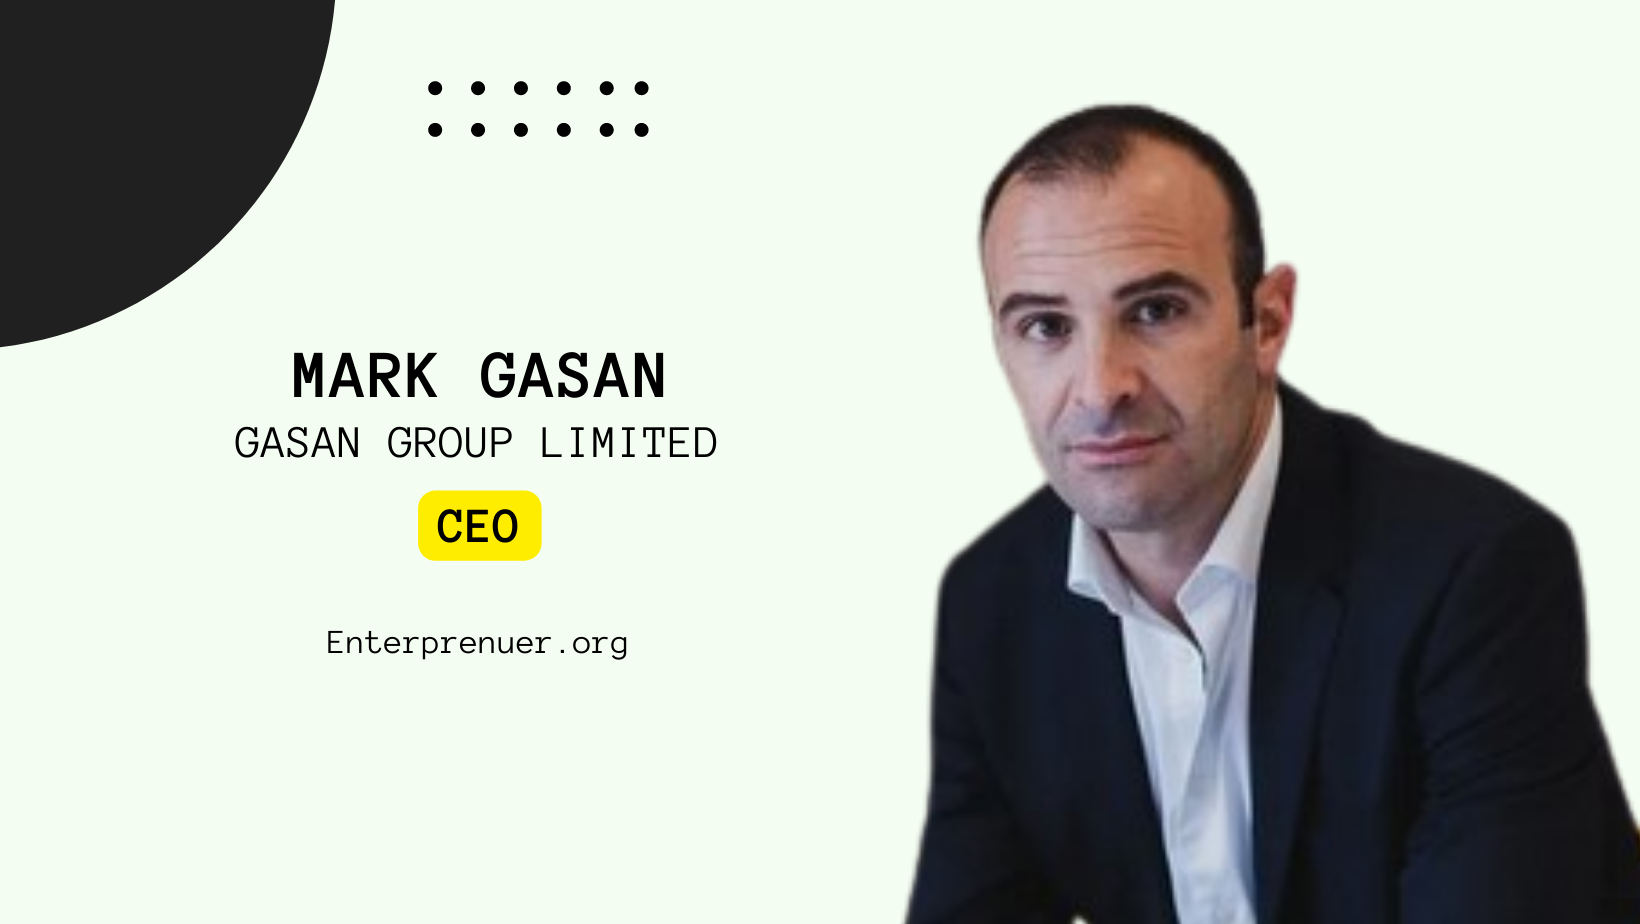 Meet Mark Gasan CEO of Gasan Group Limited